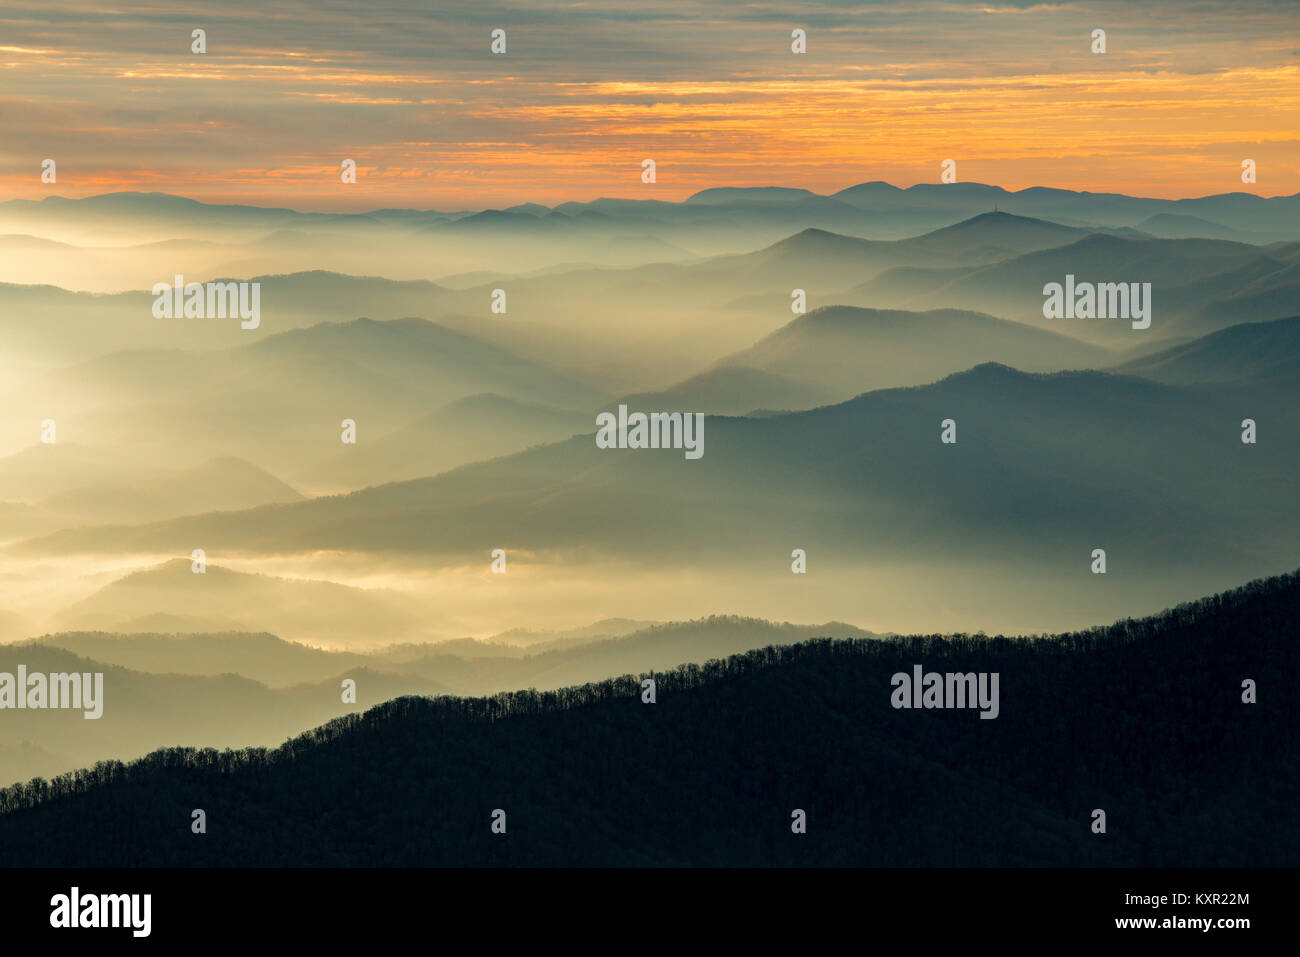 Sonnenaufgang von Clingman's Dome, Great Smoky Mountains NP, TN, USA, von Bill Lea/Dembinsky Foto Assoc Stockfoto